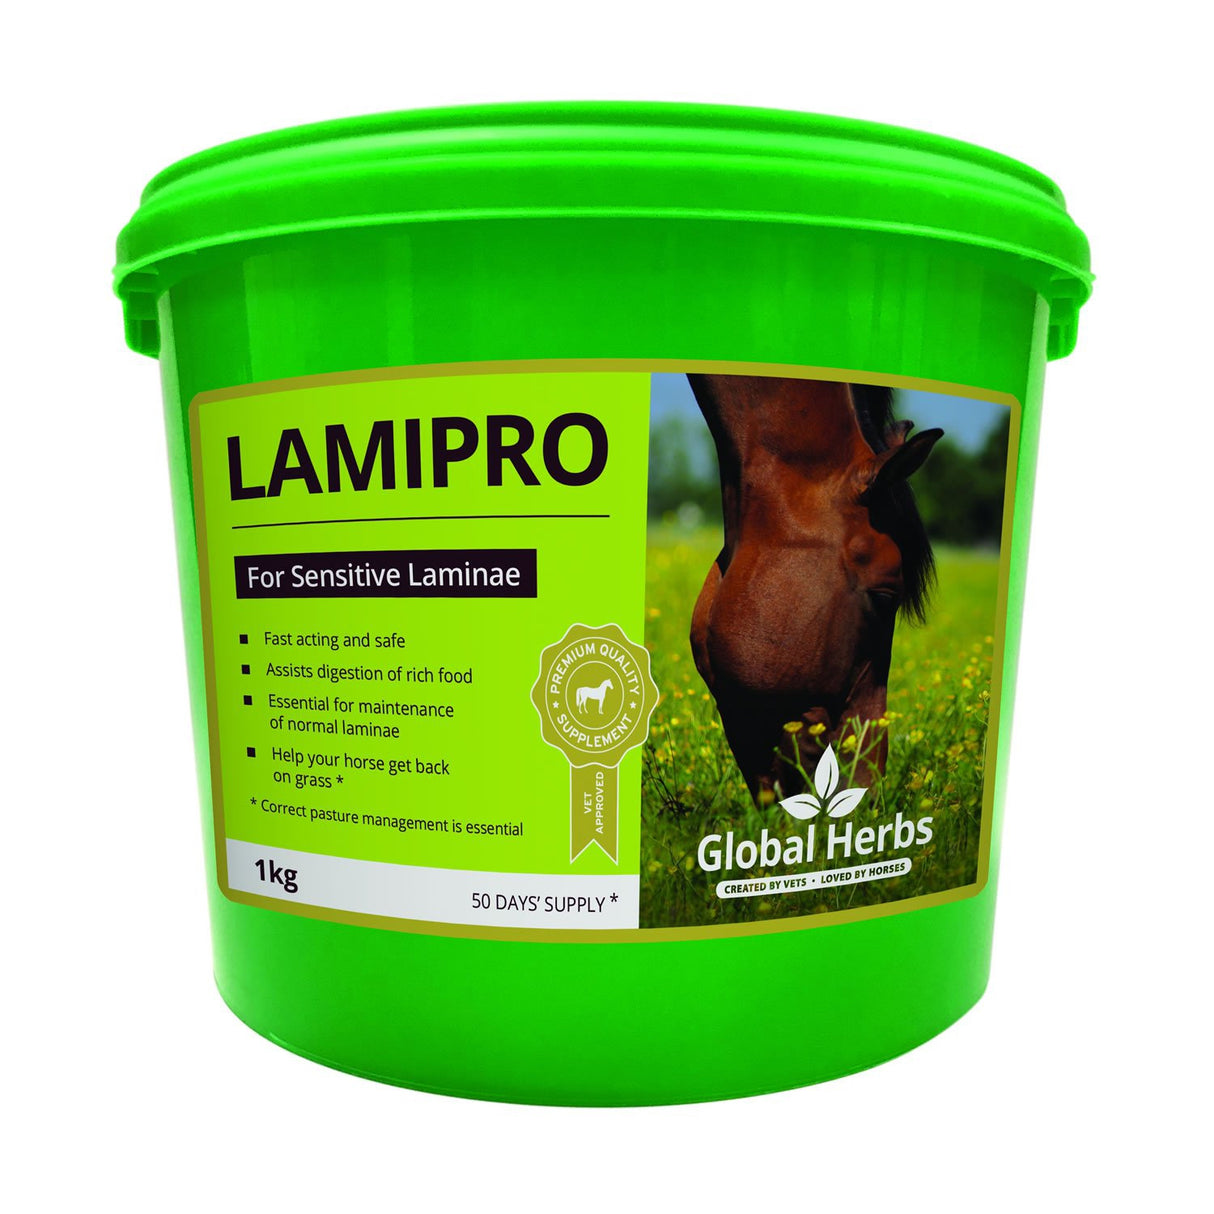 Poudre LamiPro de Global Herbs